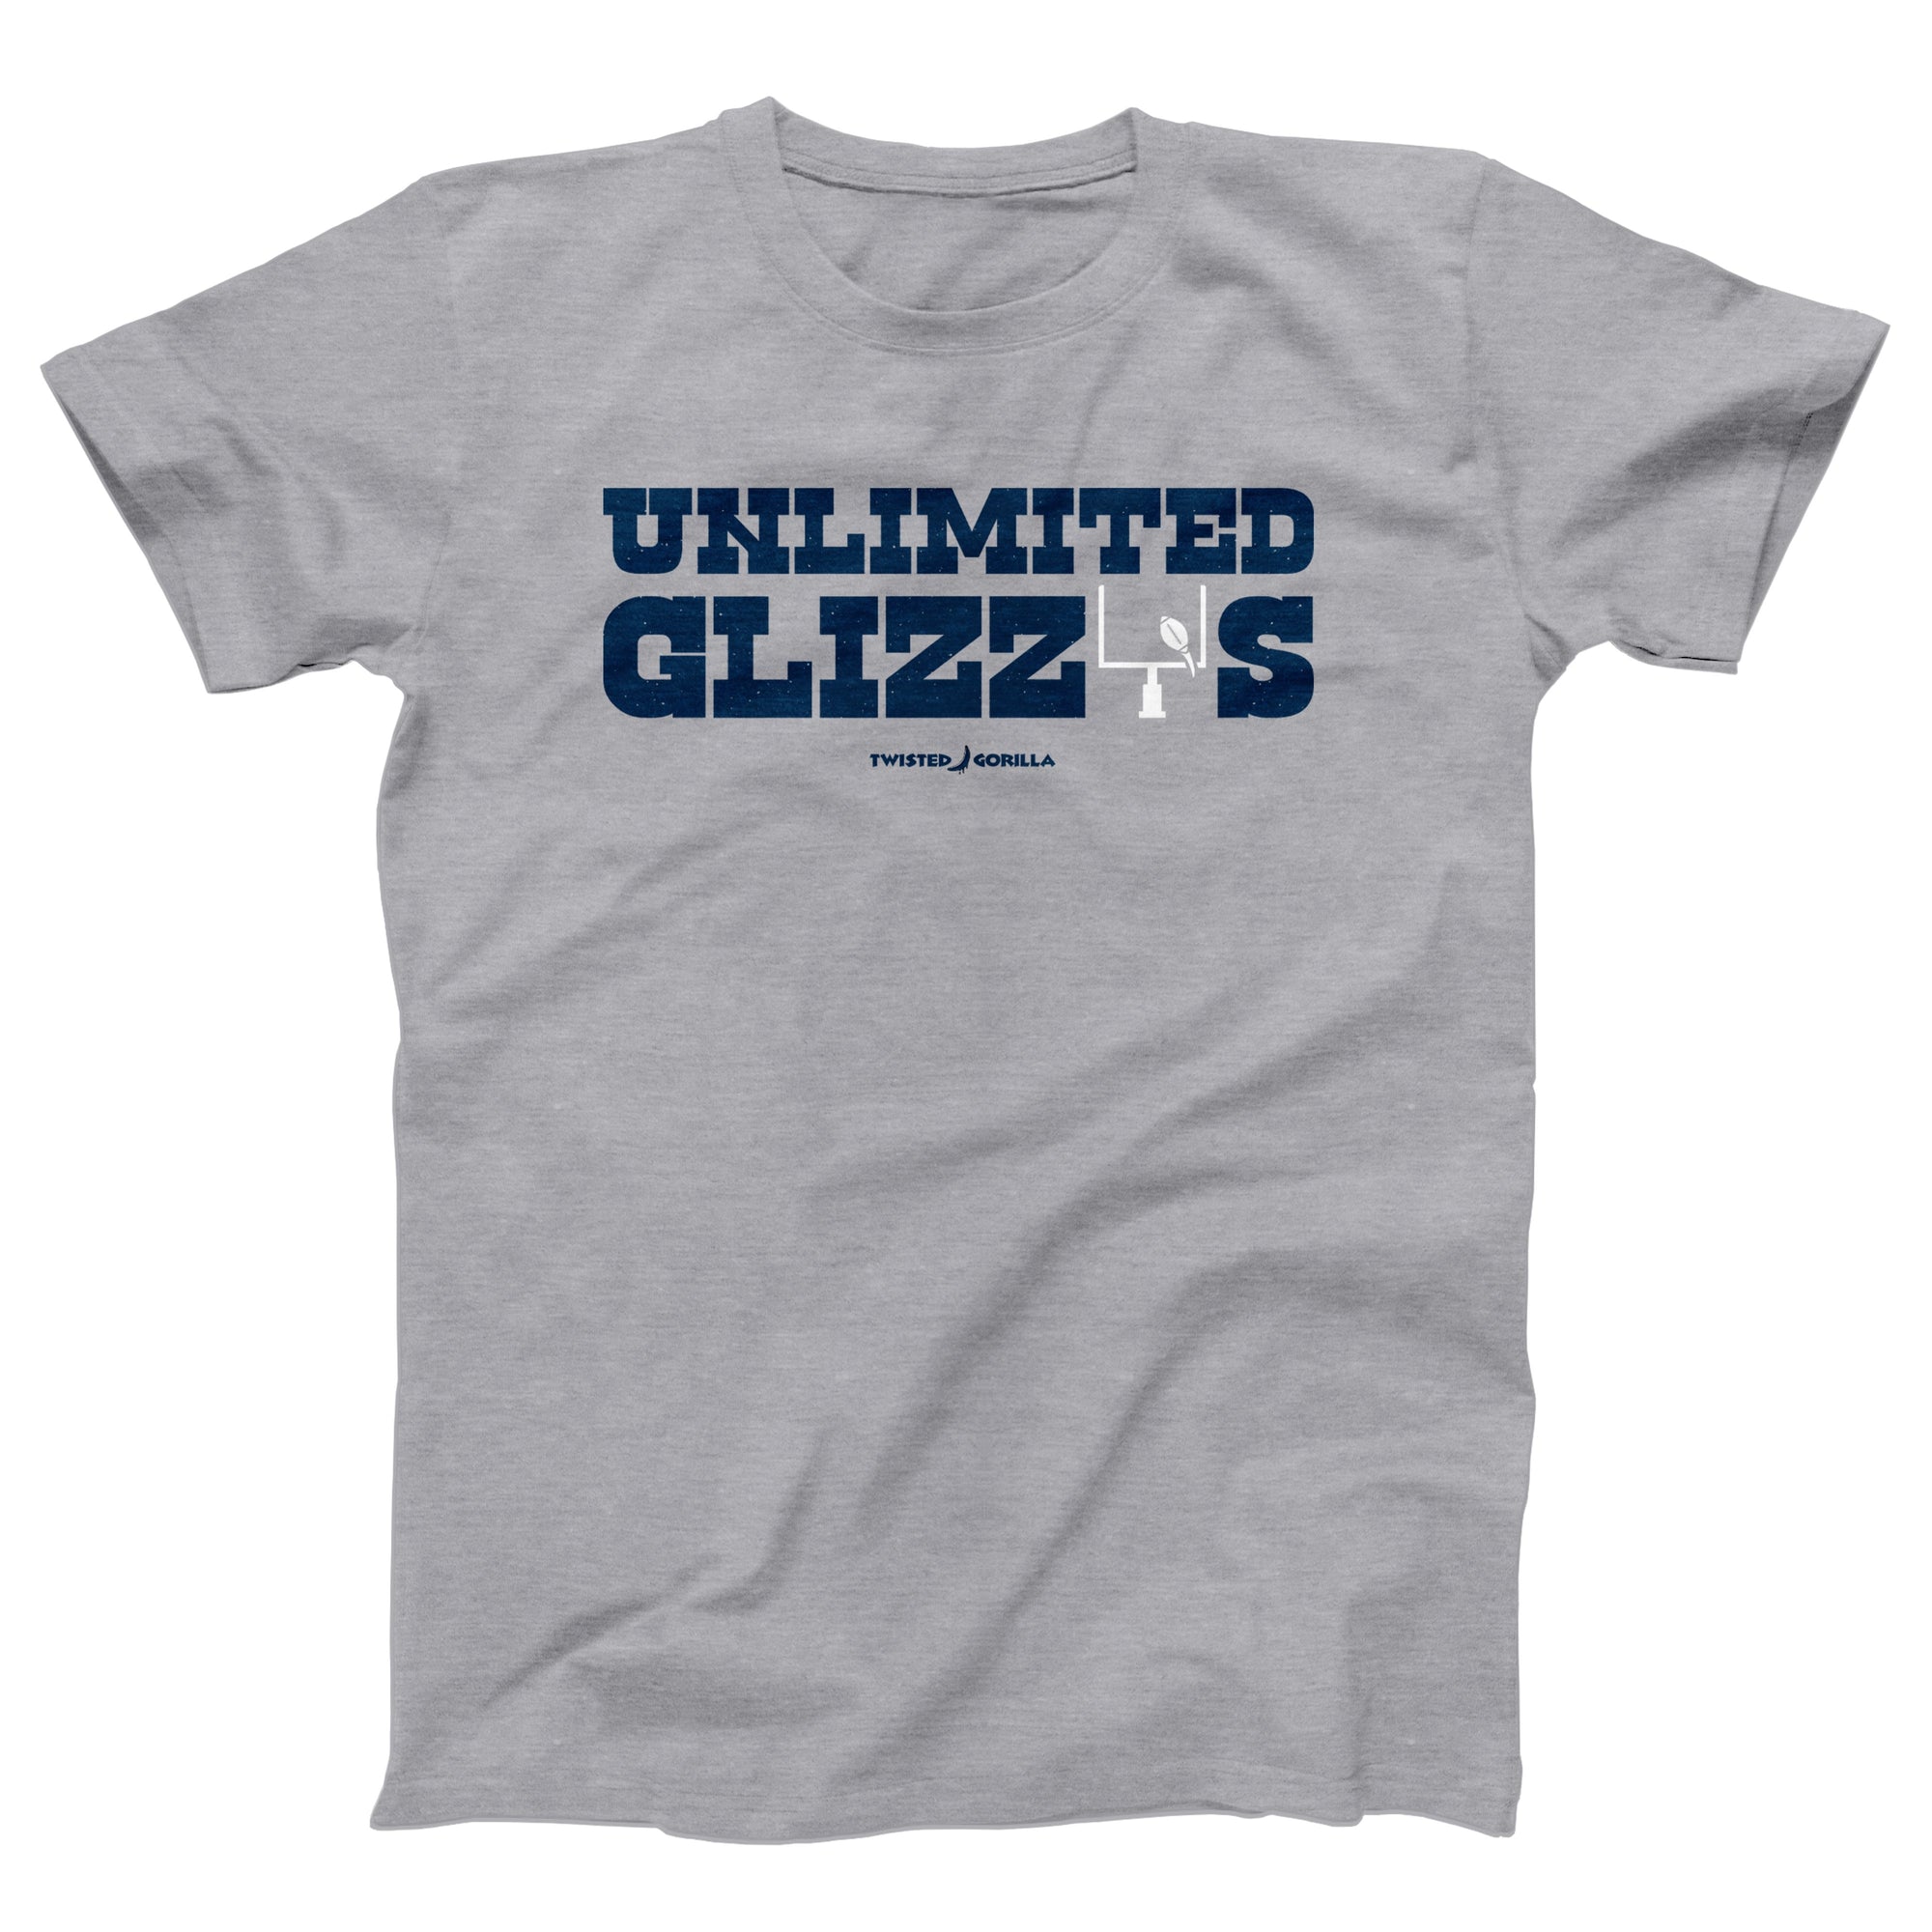 Unlimited Glizzys Adult Unisex T-Shirt - anishphilip